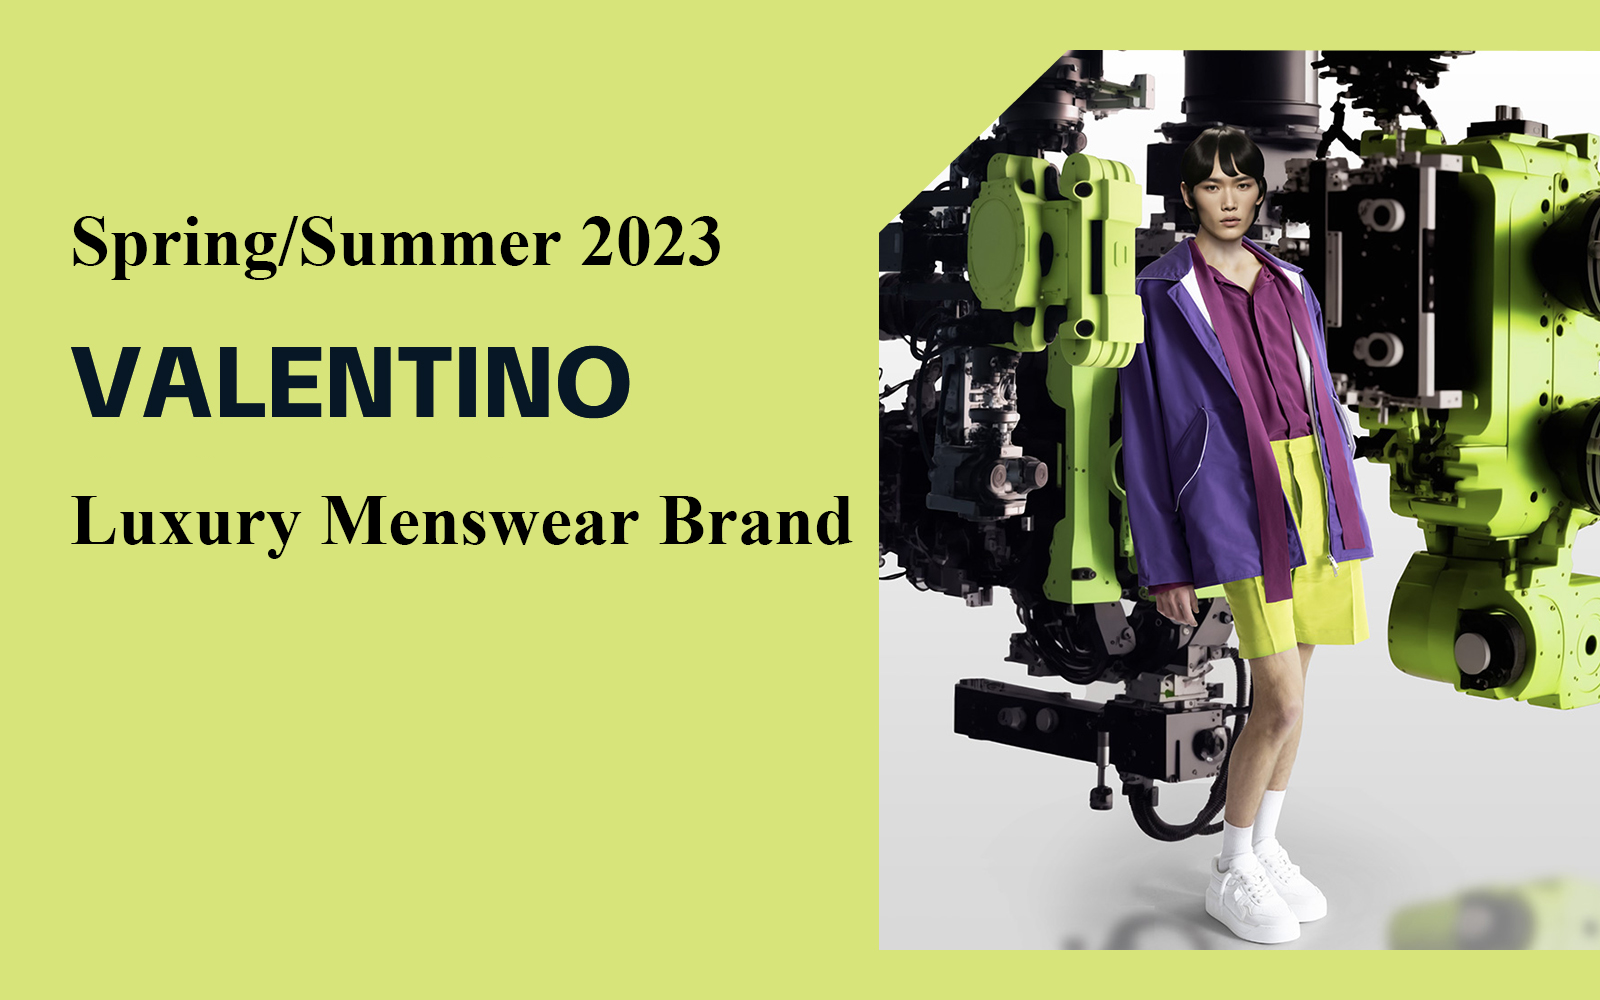 The Analysis of Valentino The Luxury Menswear Brand